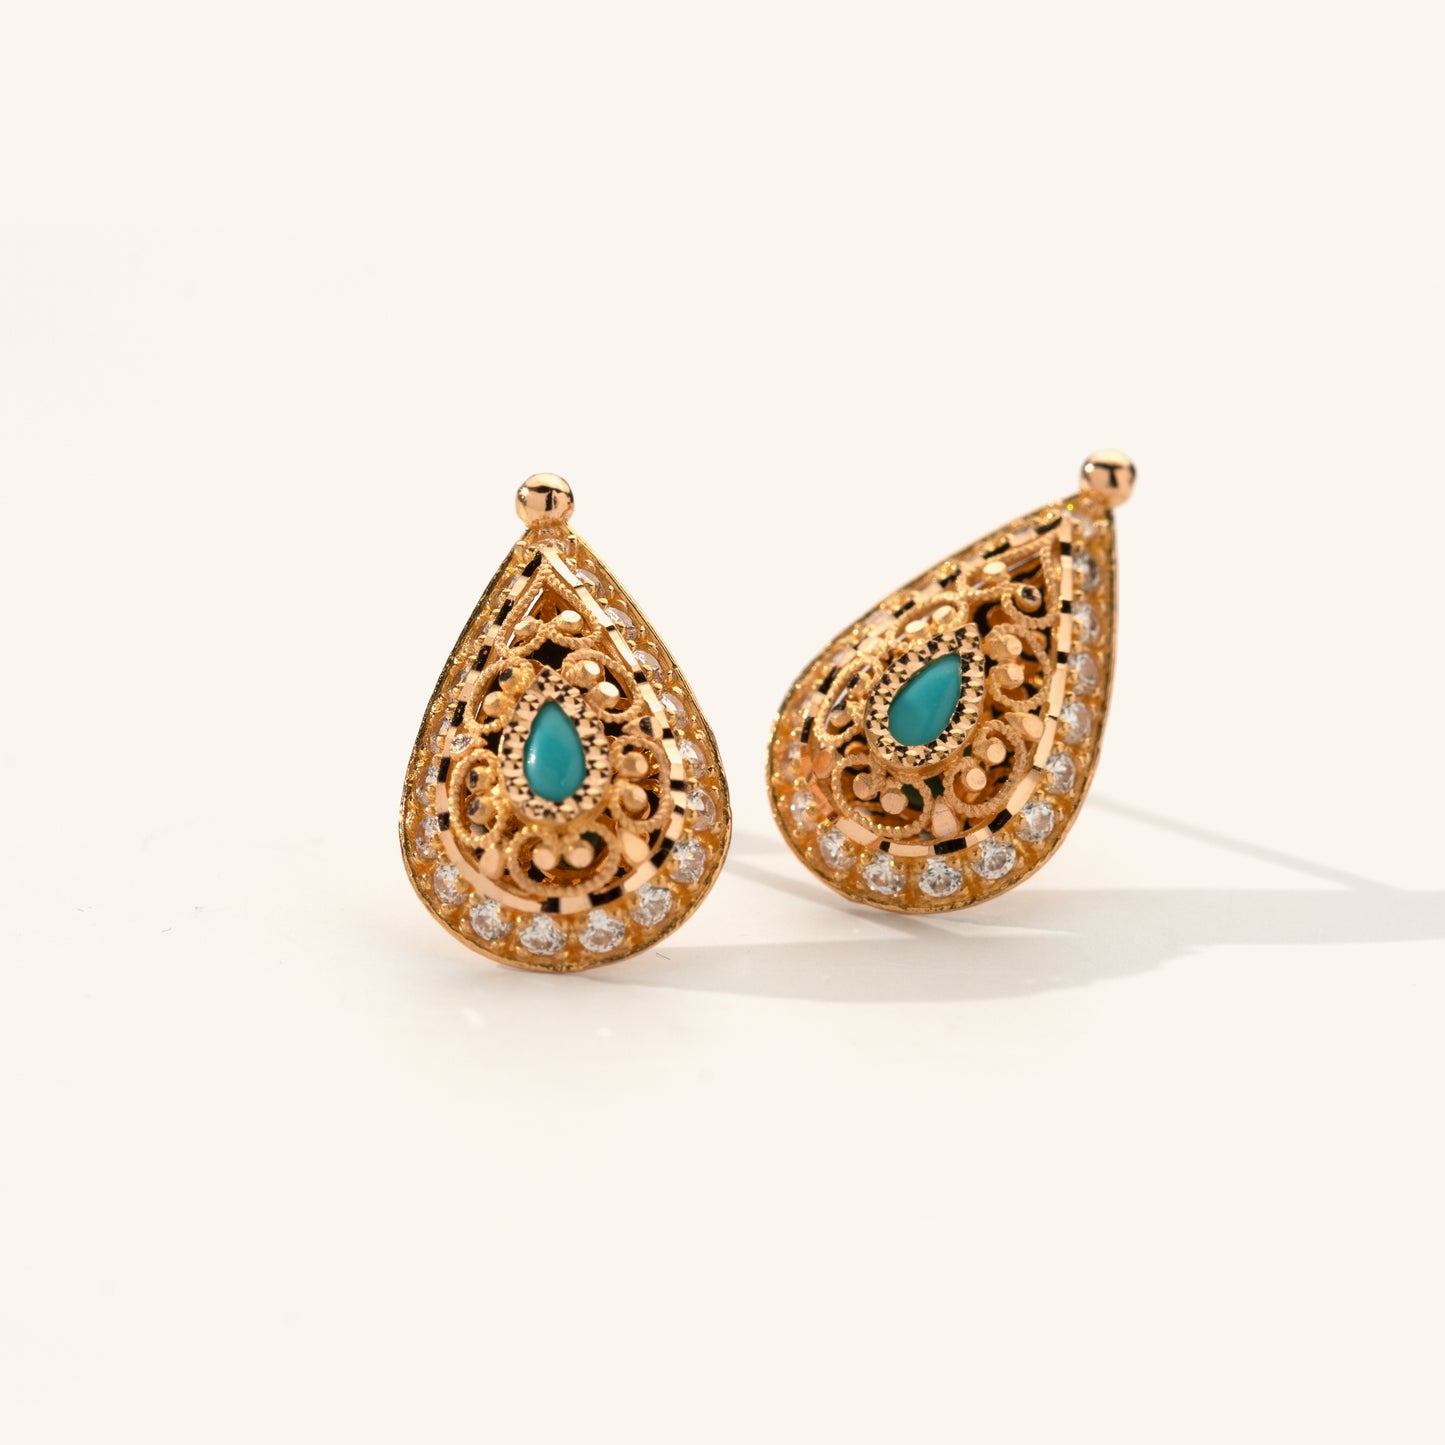 21k Earrings - Turquoise